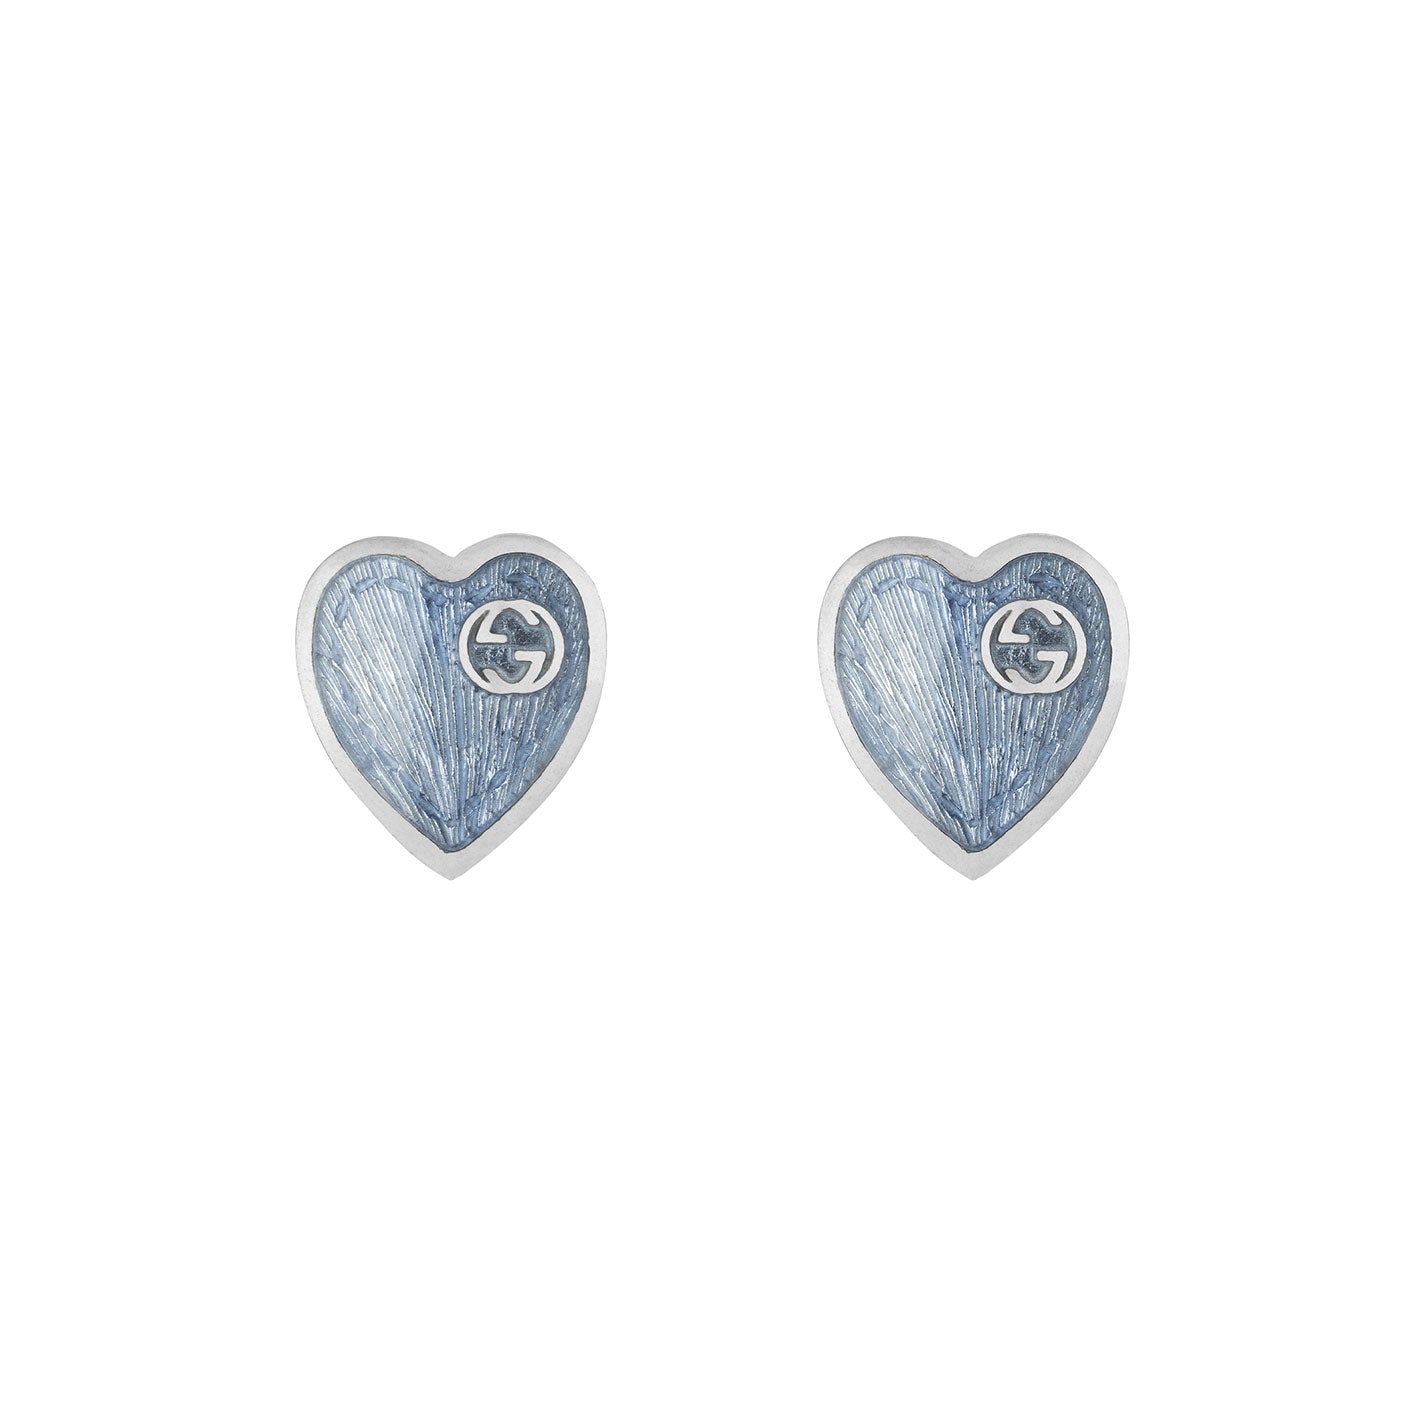 Gucci Interlocking G Sterling Silver Stud Earrings with Blue Enamel